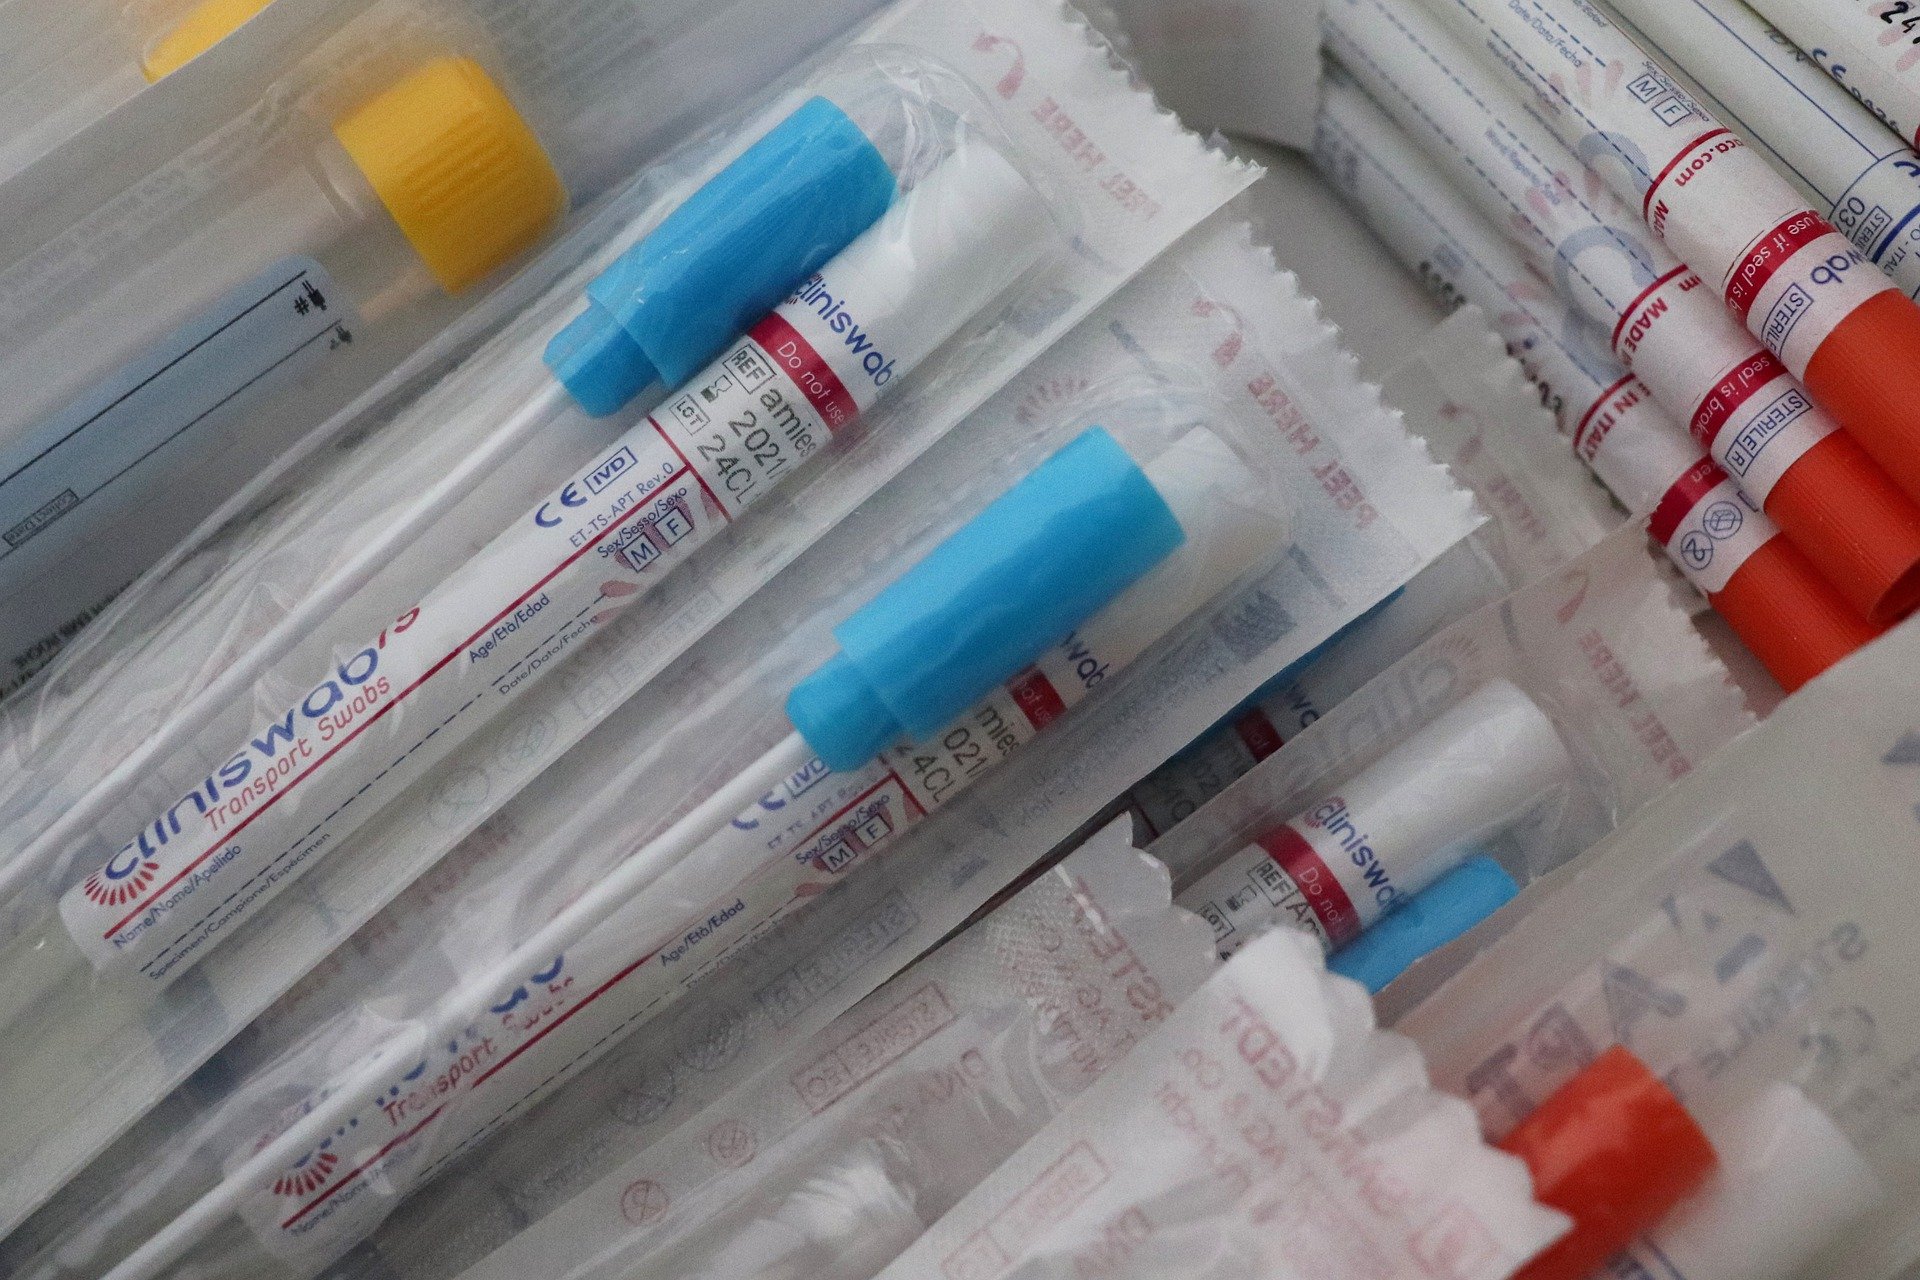 Test sierologici a campione: da mercoledì oltre 800 persone coinvolte in provincia di Alessandria